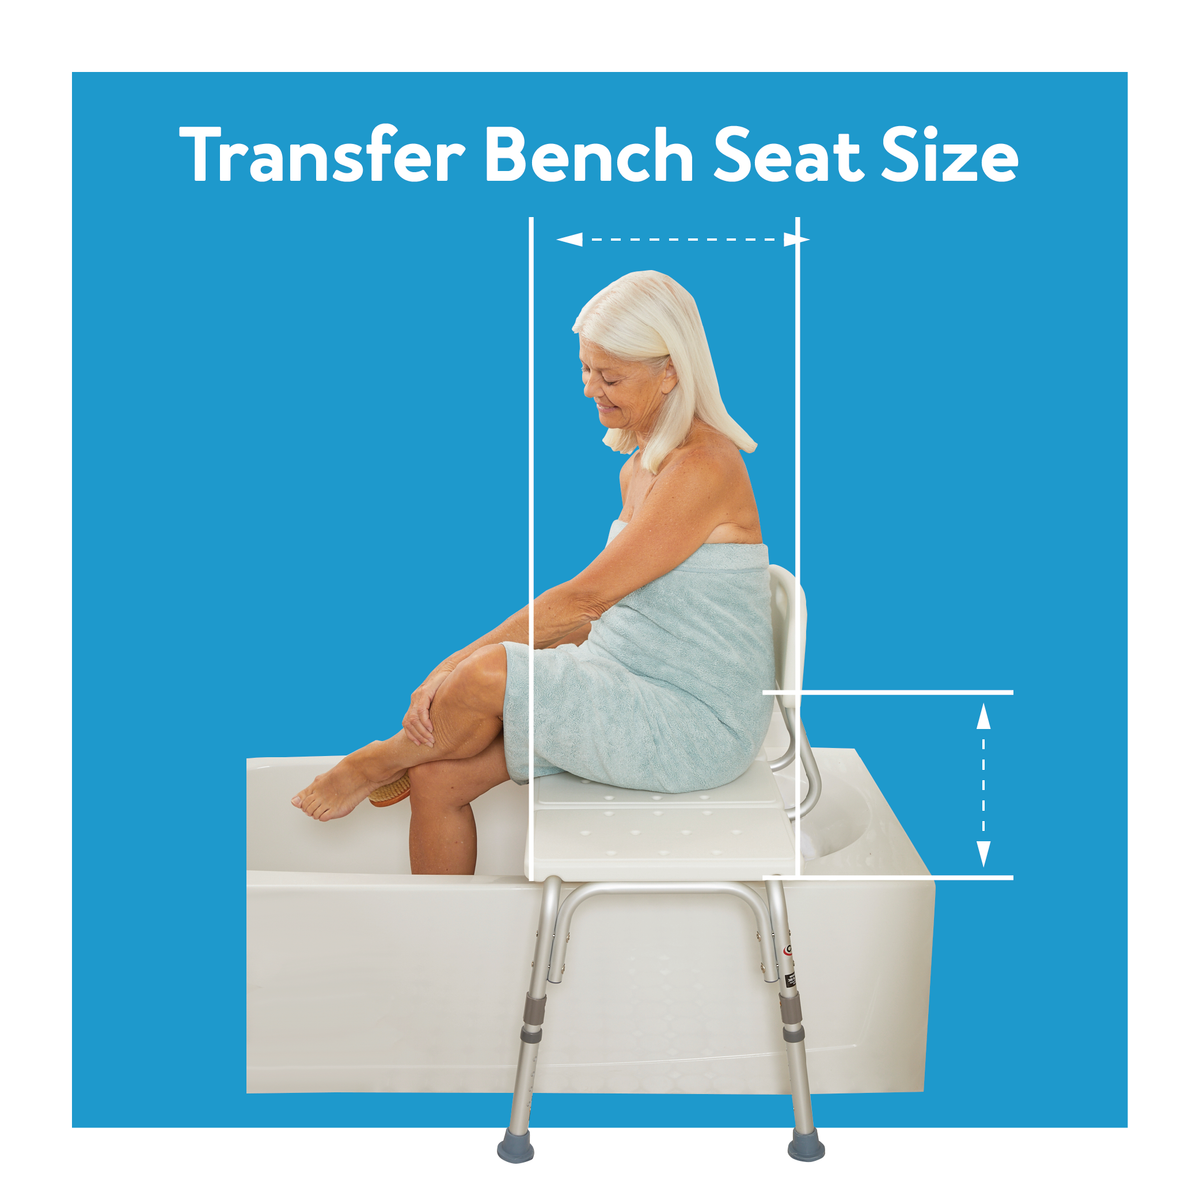 Transfer Bench Seat Size